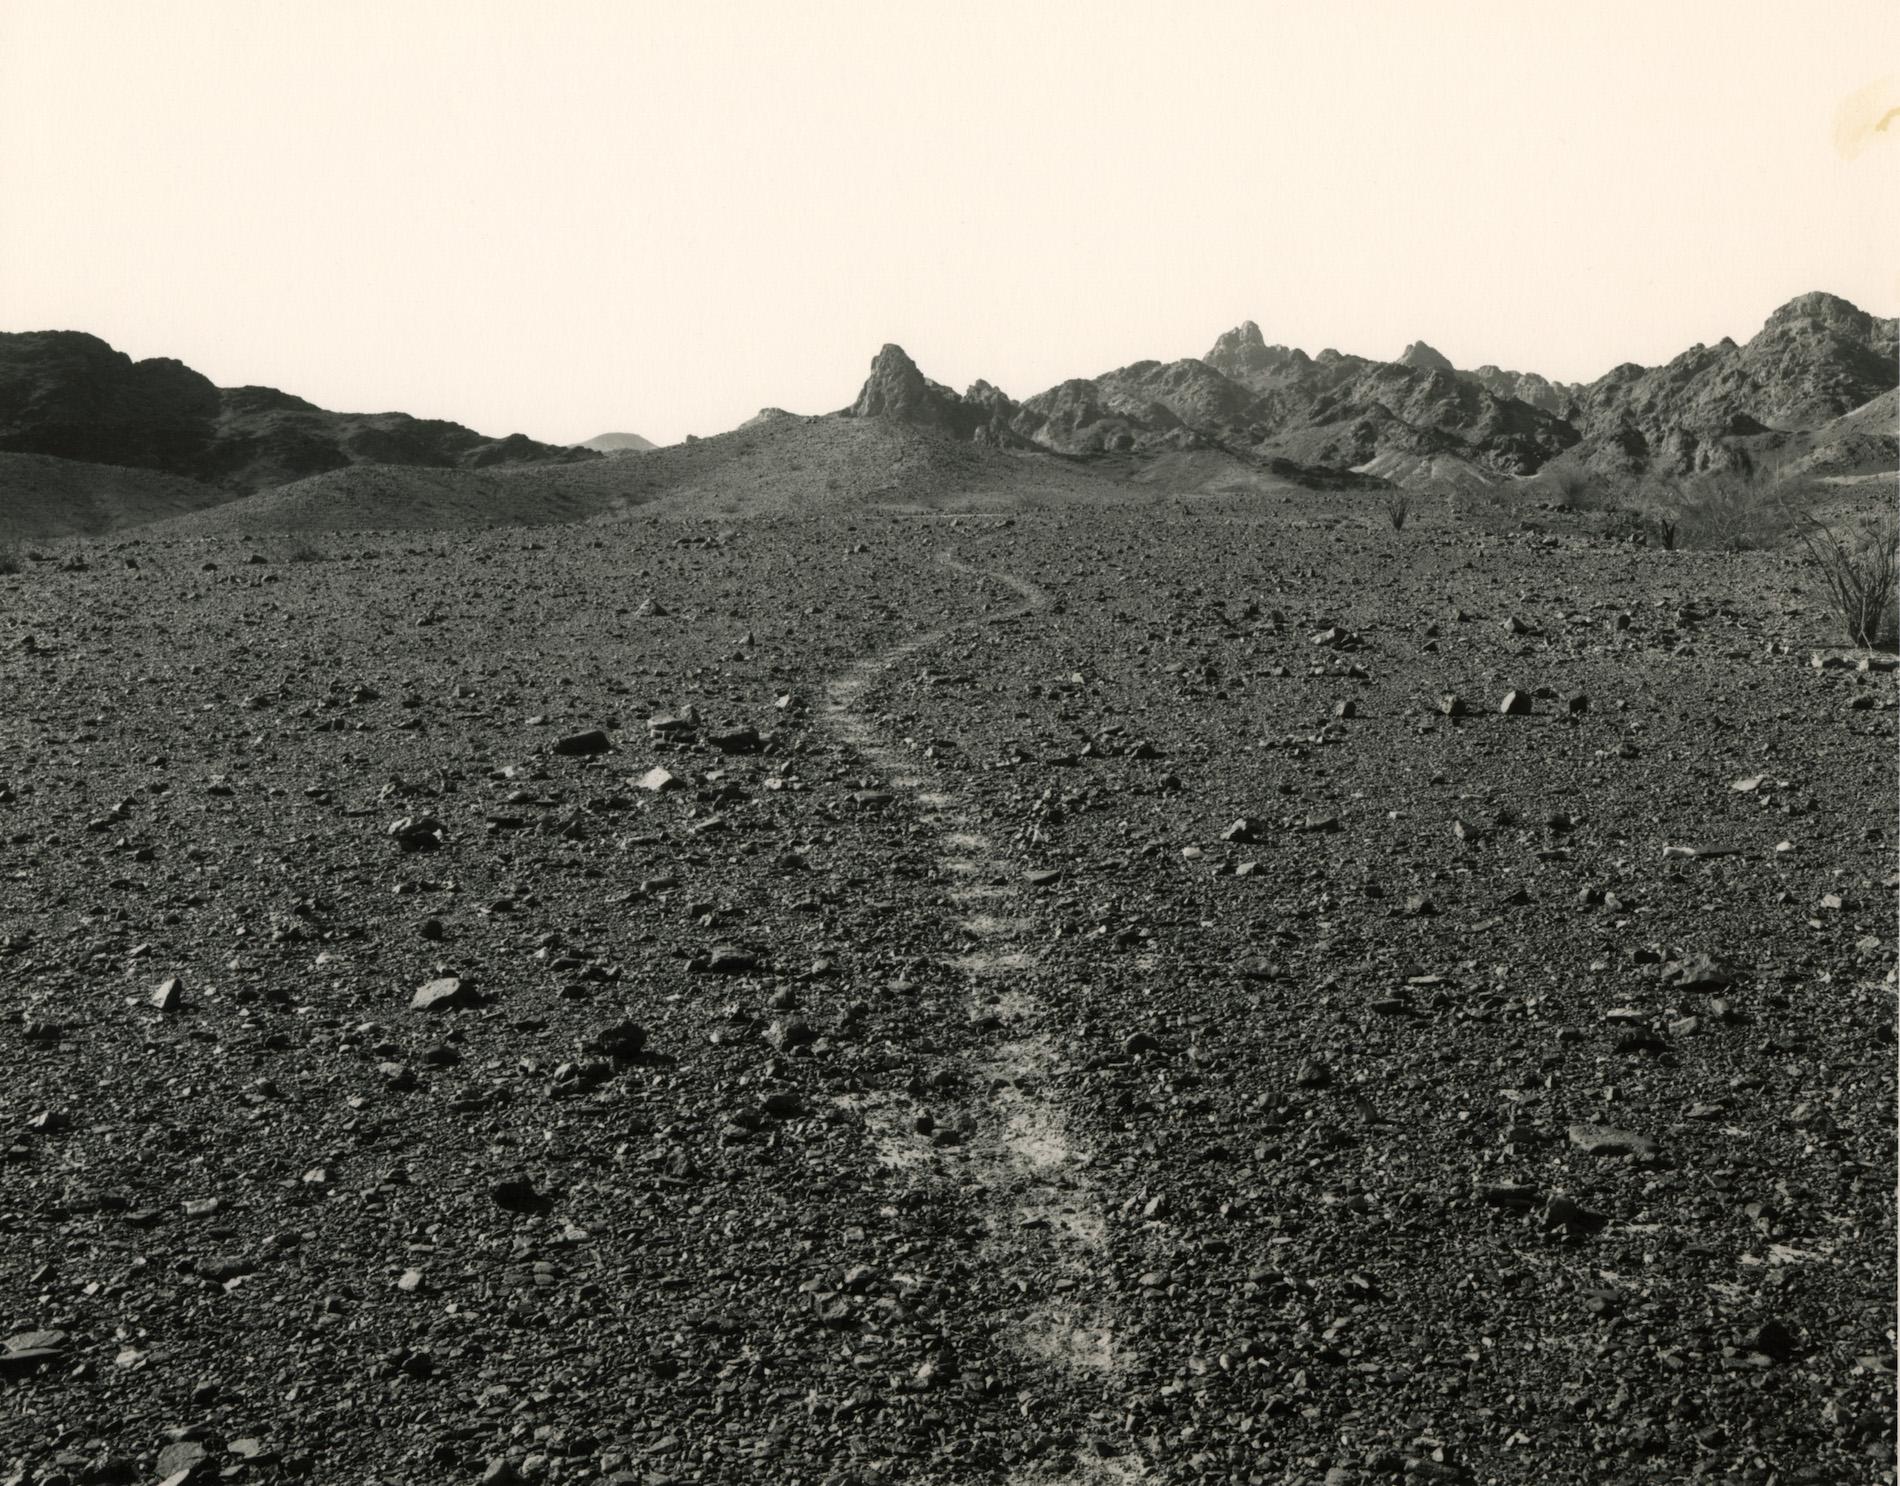 A trail of footprints through a large dirt field